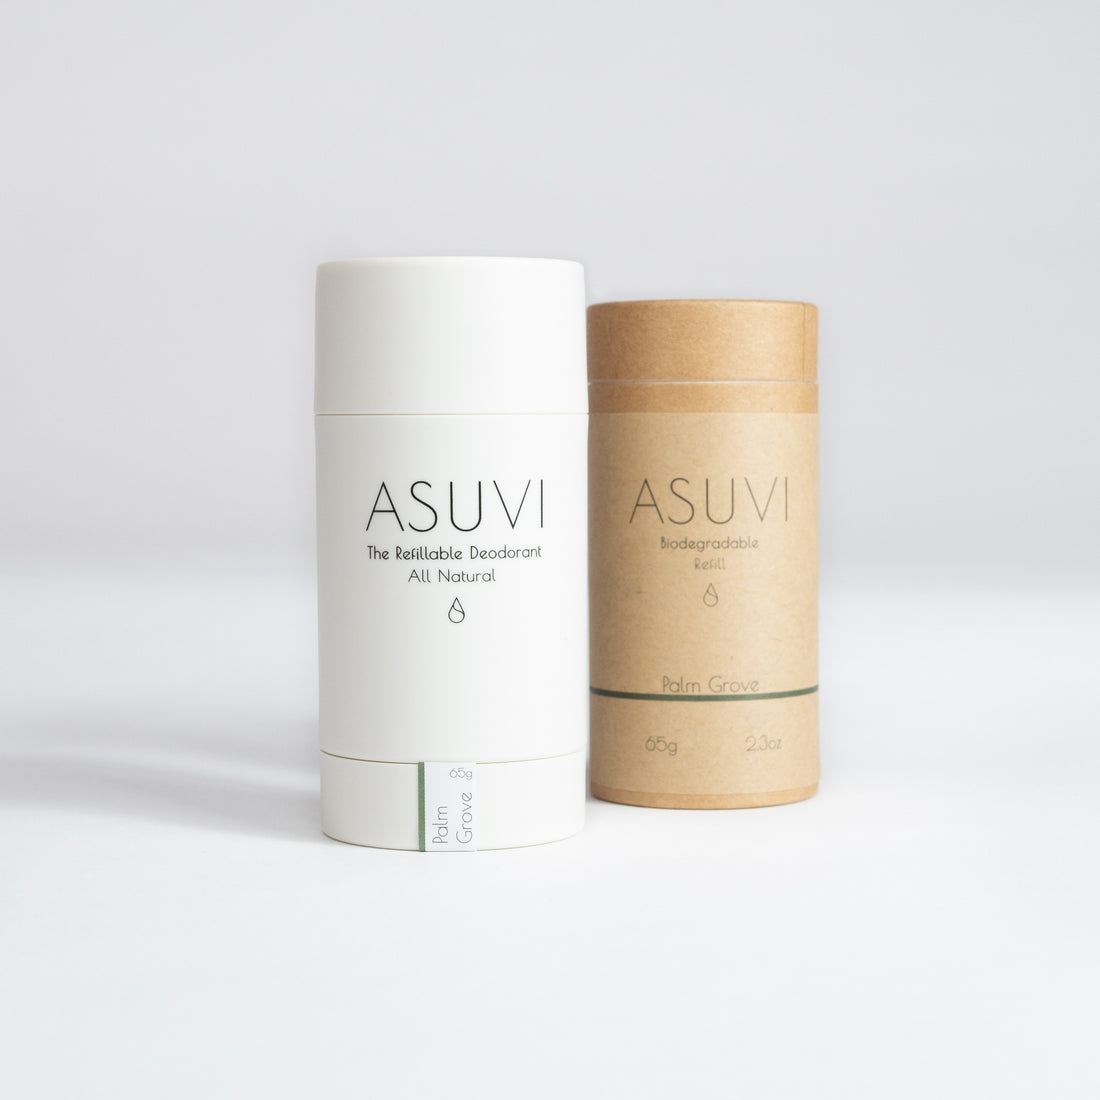 Asuvi Deodorant - Normal/Palm Grove 減汗香體膏 - 一般配方/甜美辛香調 65g